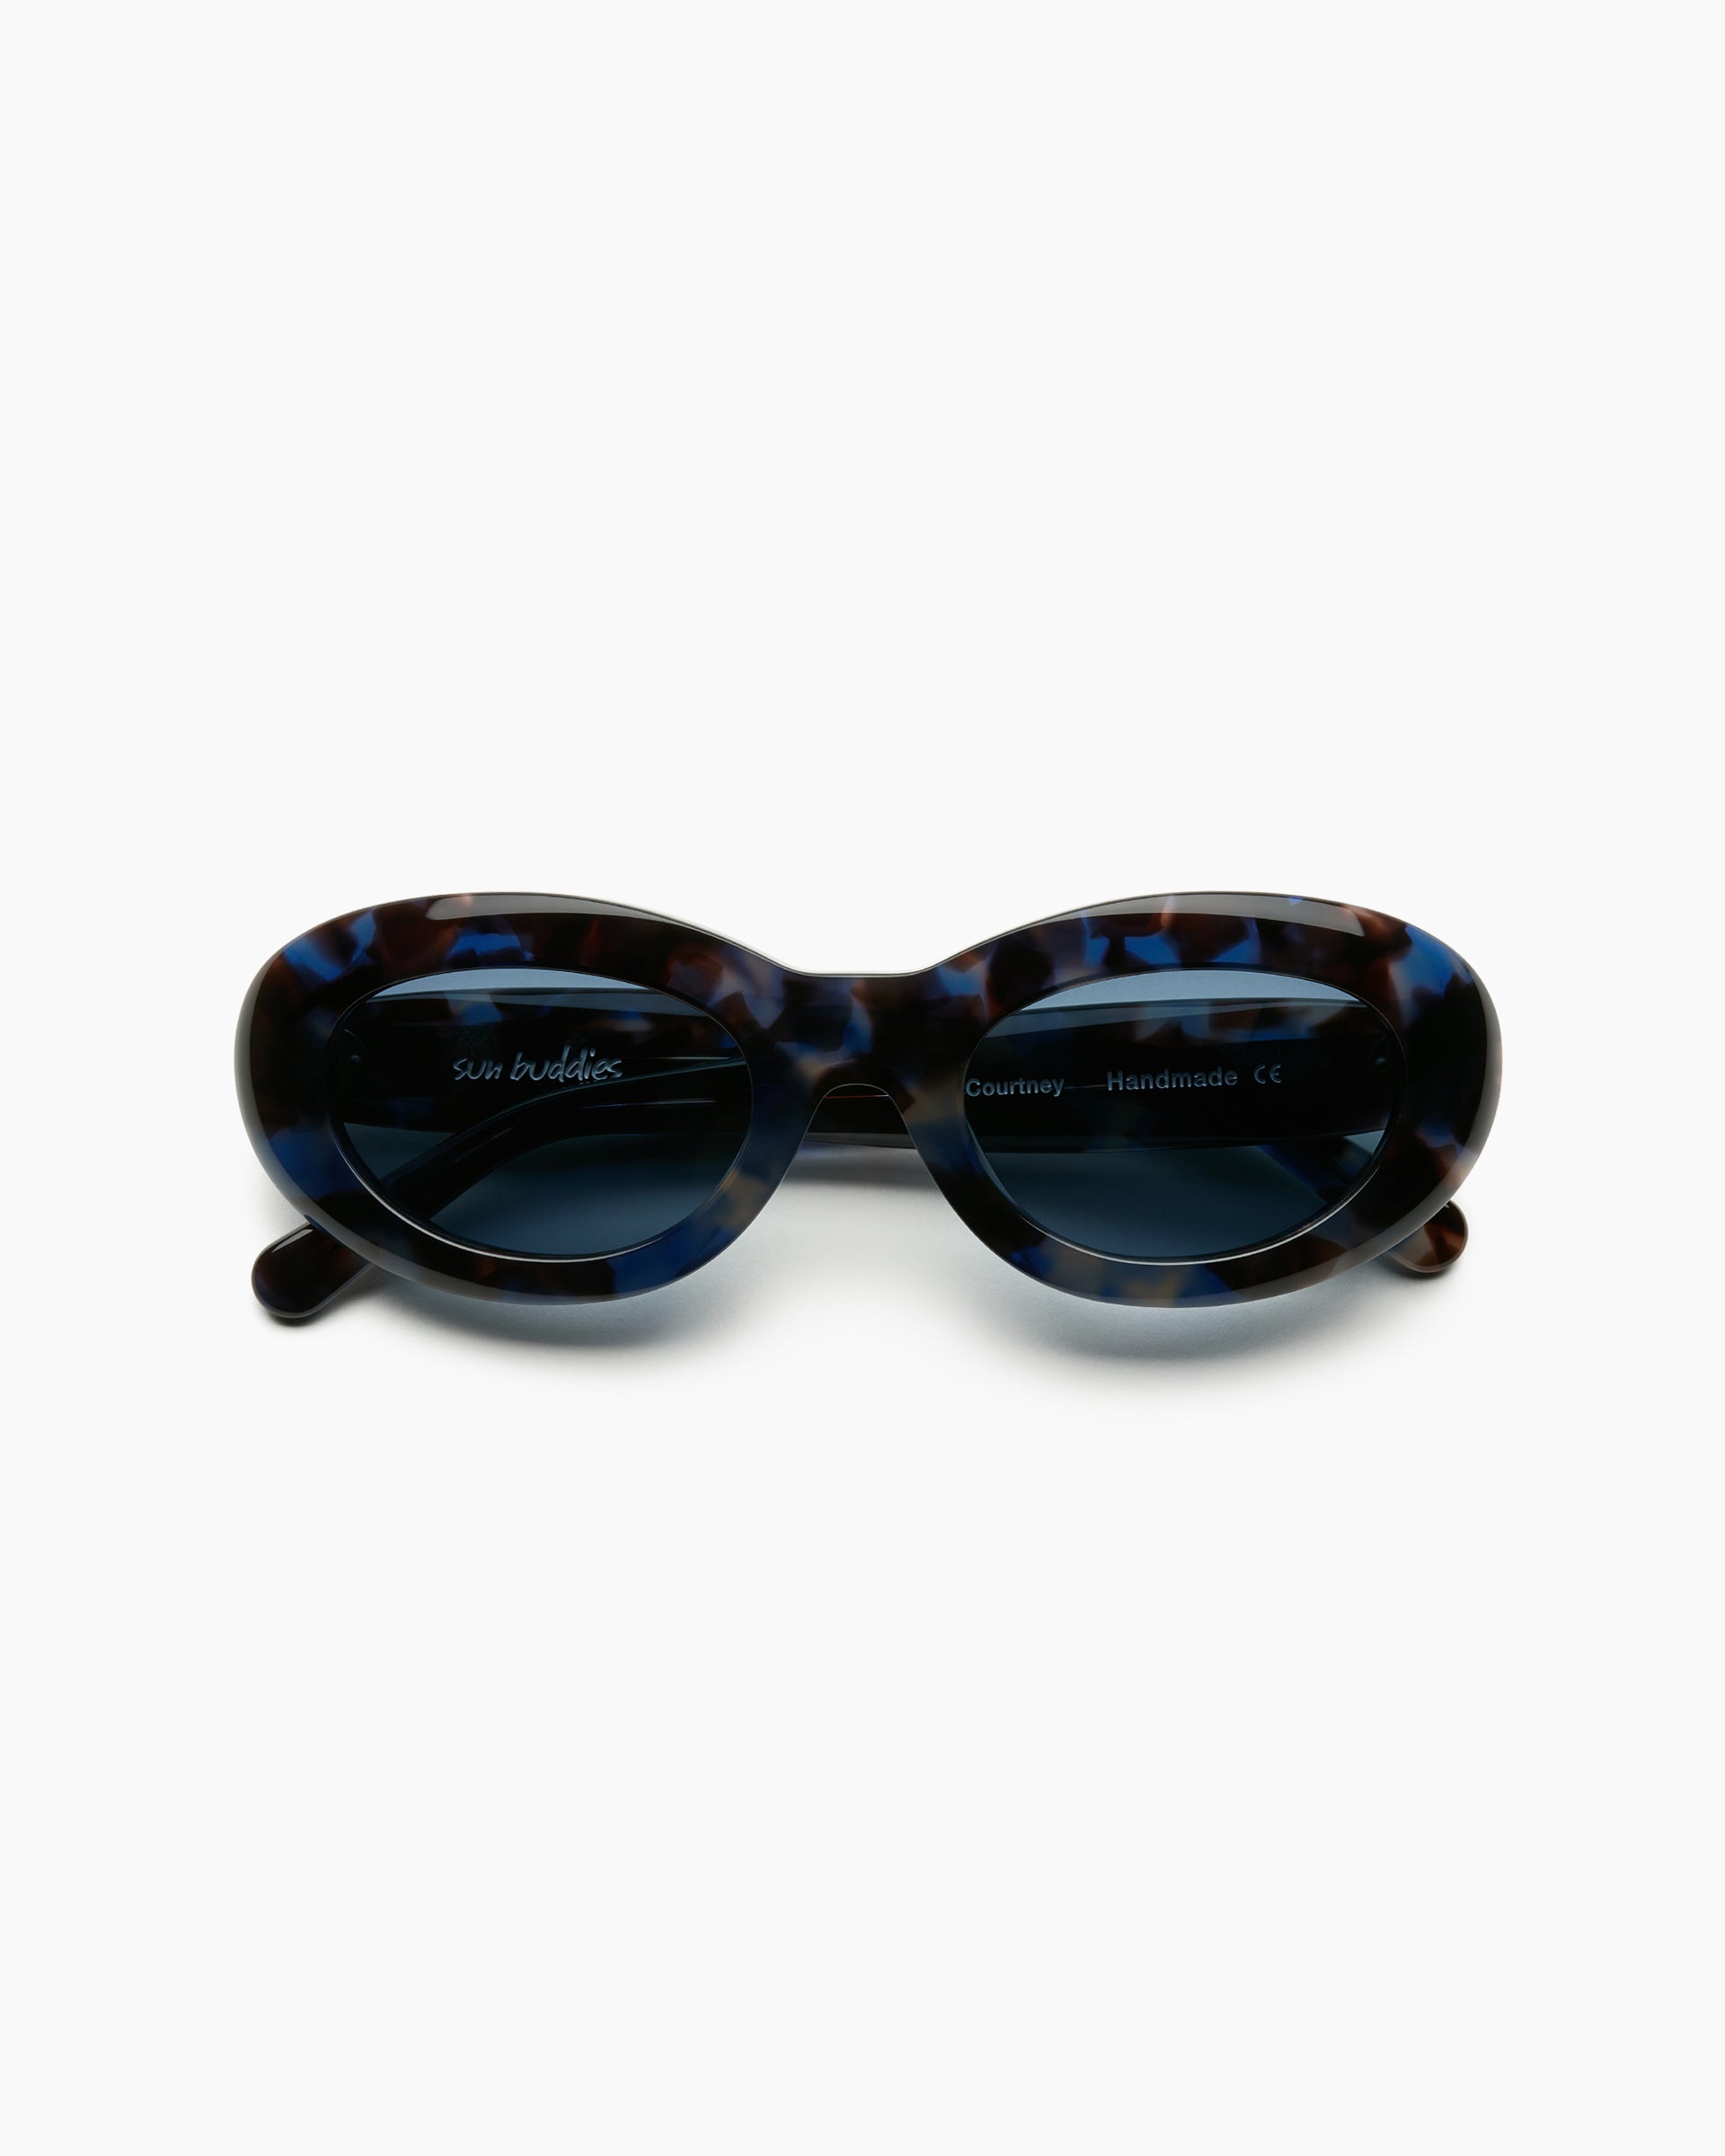 Courtney Sunglasses Deep Blue Sea